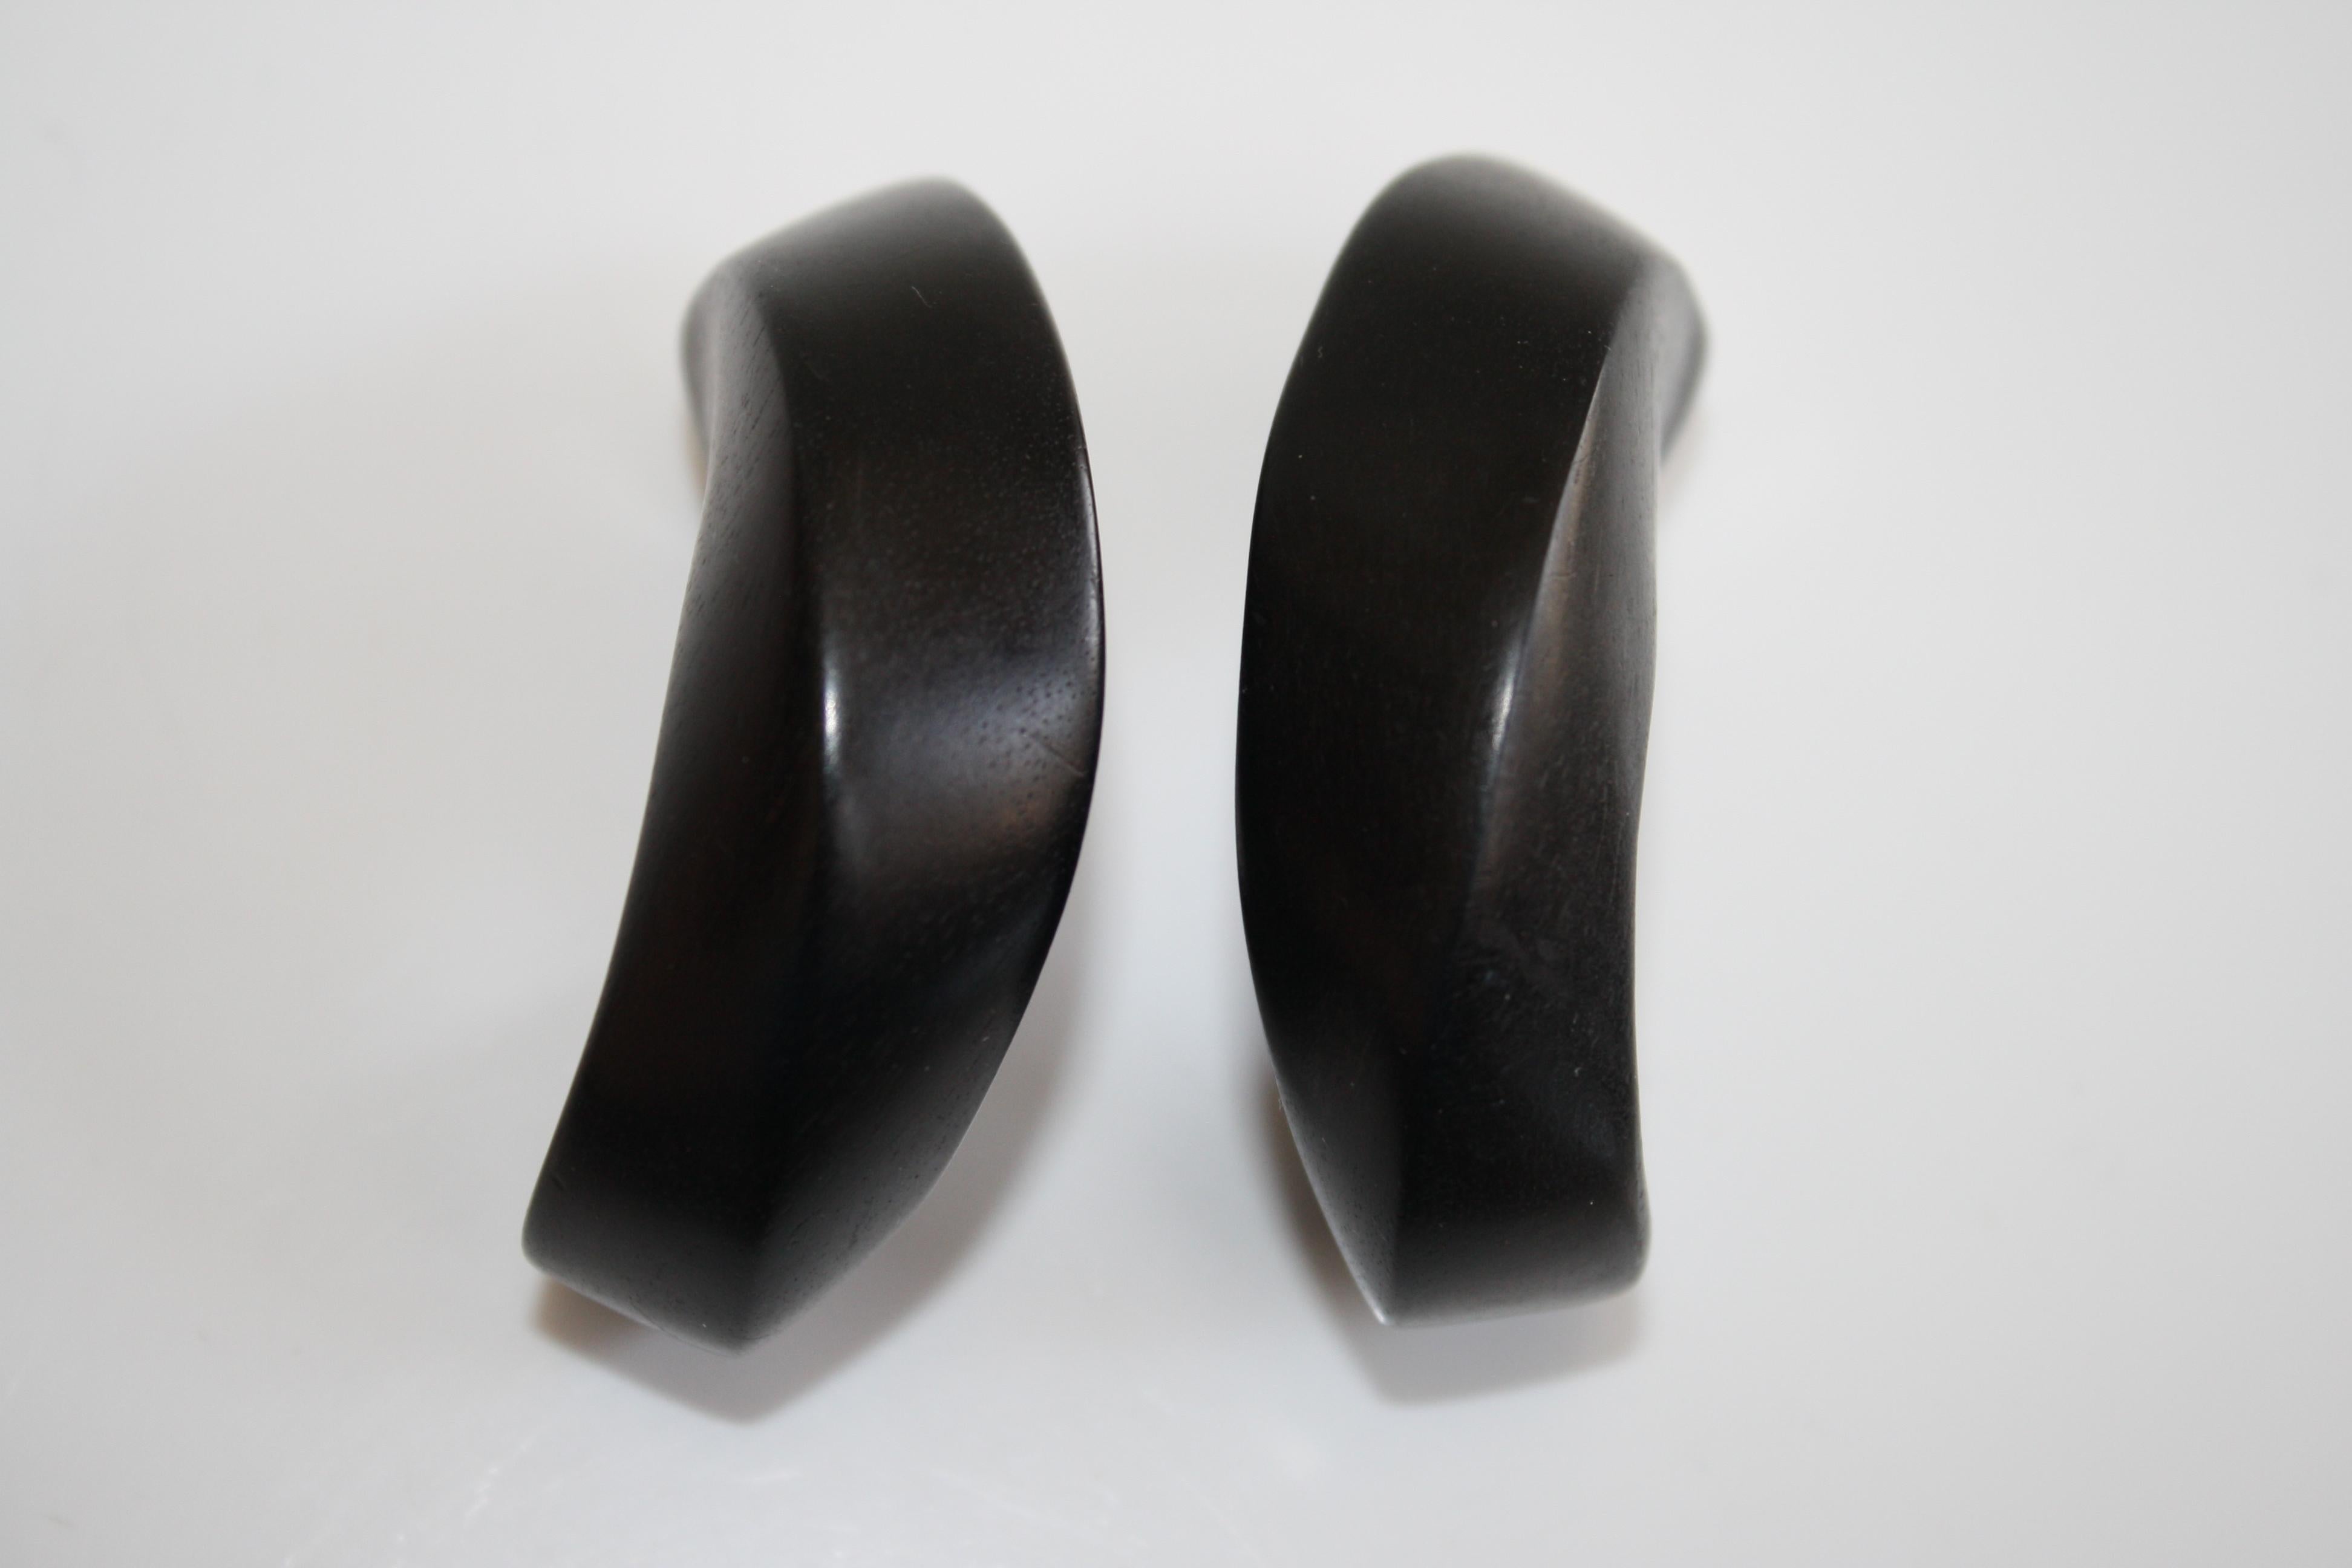 Stylish and lightweight ebony wood clip earrings from Monies Denmark. 